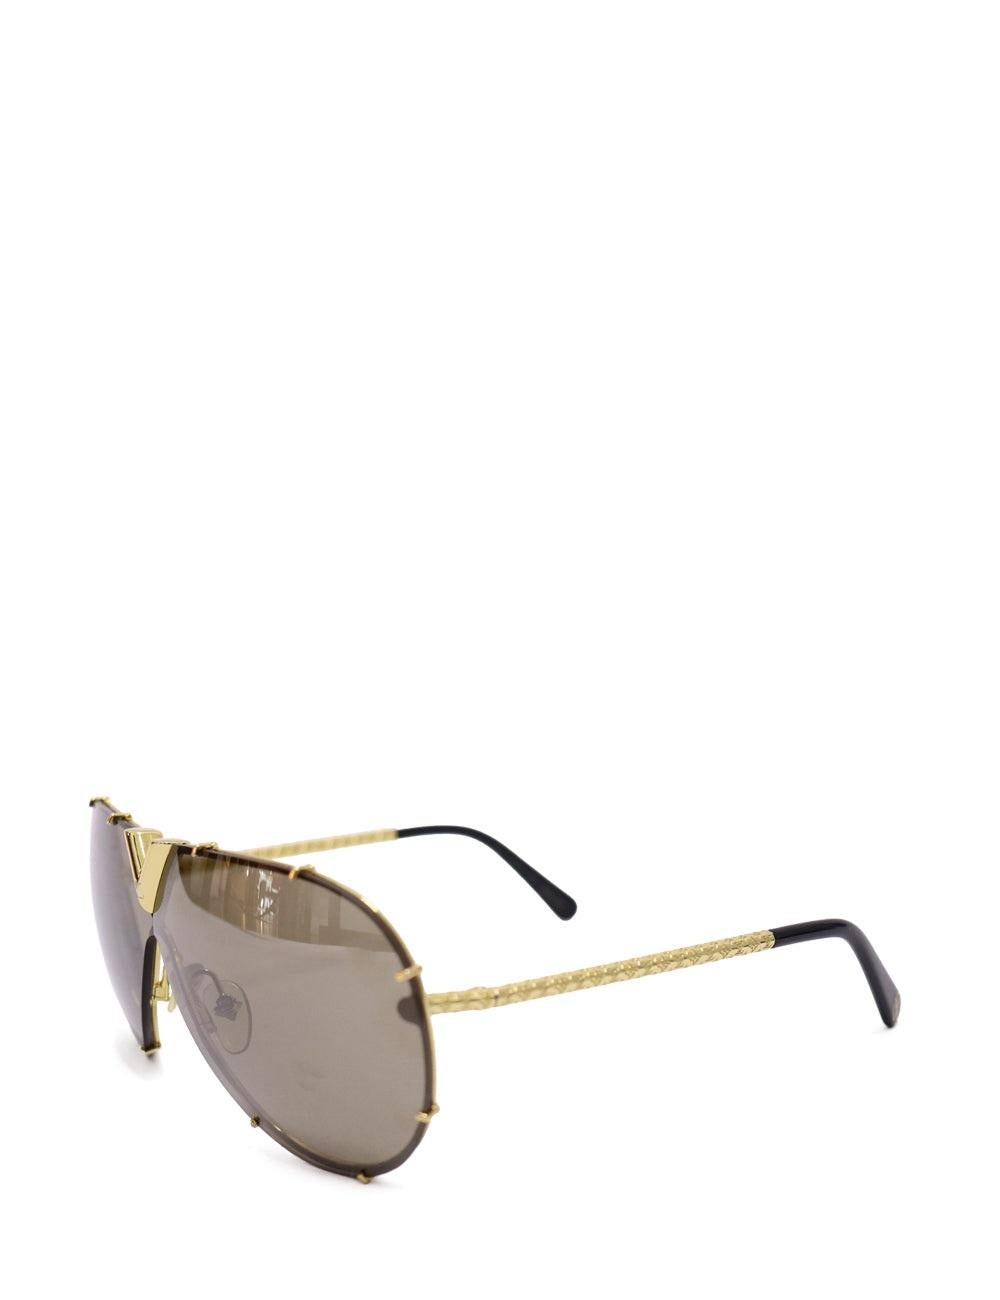 Louis Vuitton Drive Sunglasses - For Sale on 1stDibs  lv drive sunglasses, louis  vuitton lv drive sunglasses